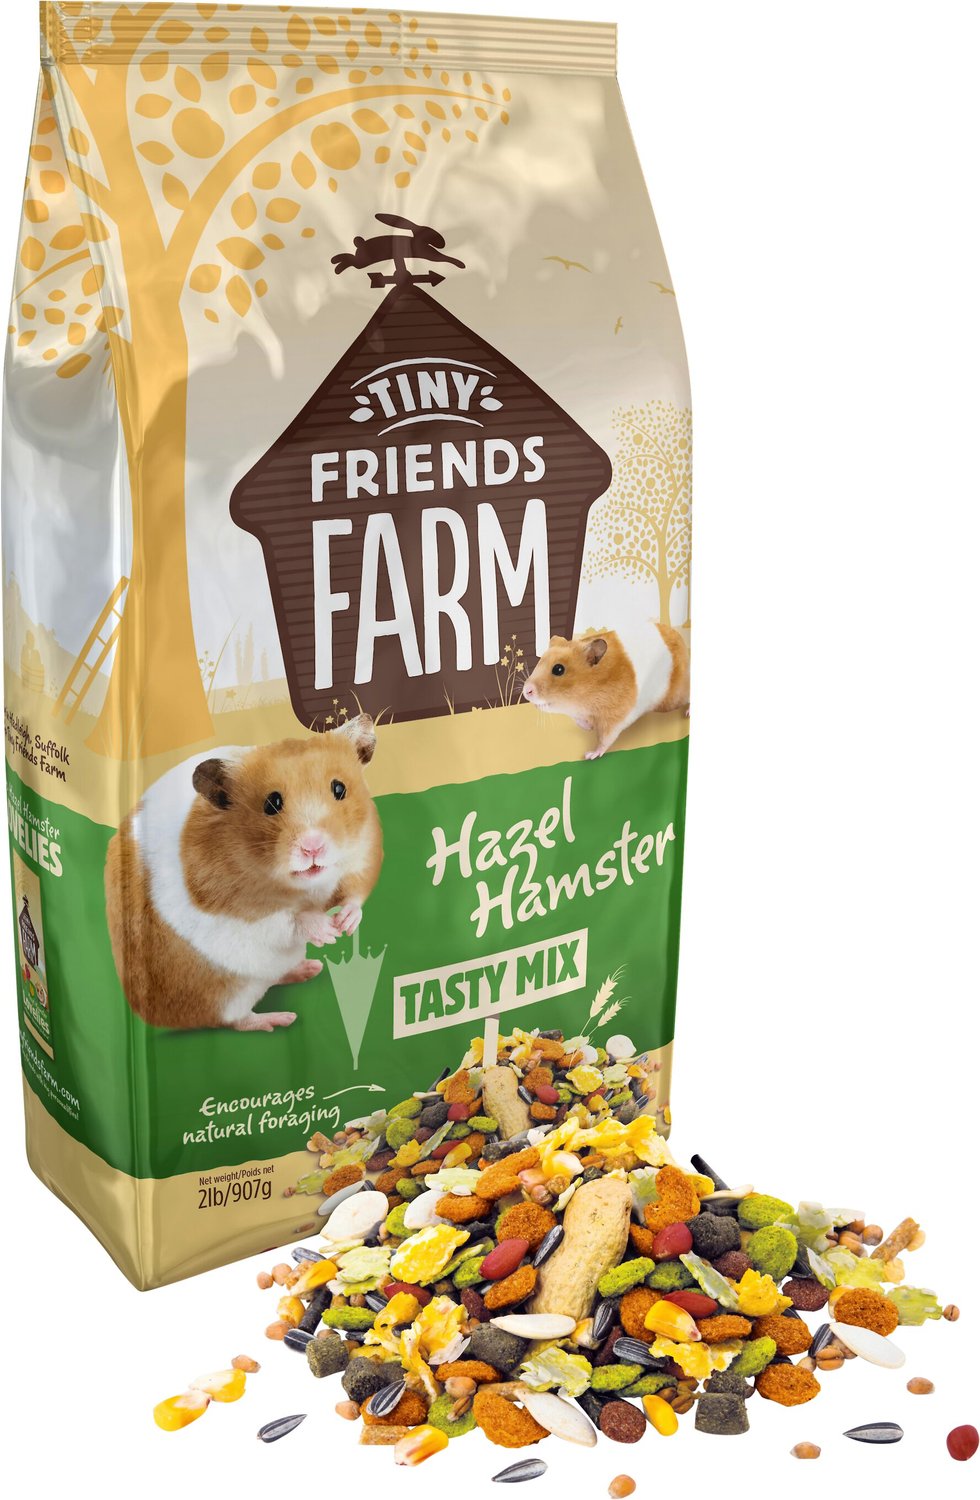 3. Tiny Friends Farm Hazel Hamster Food